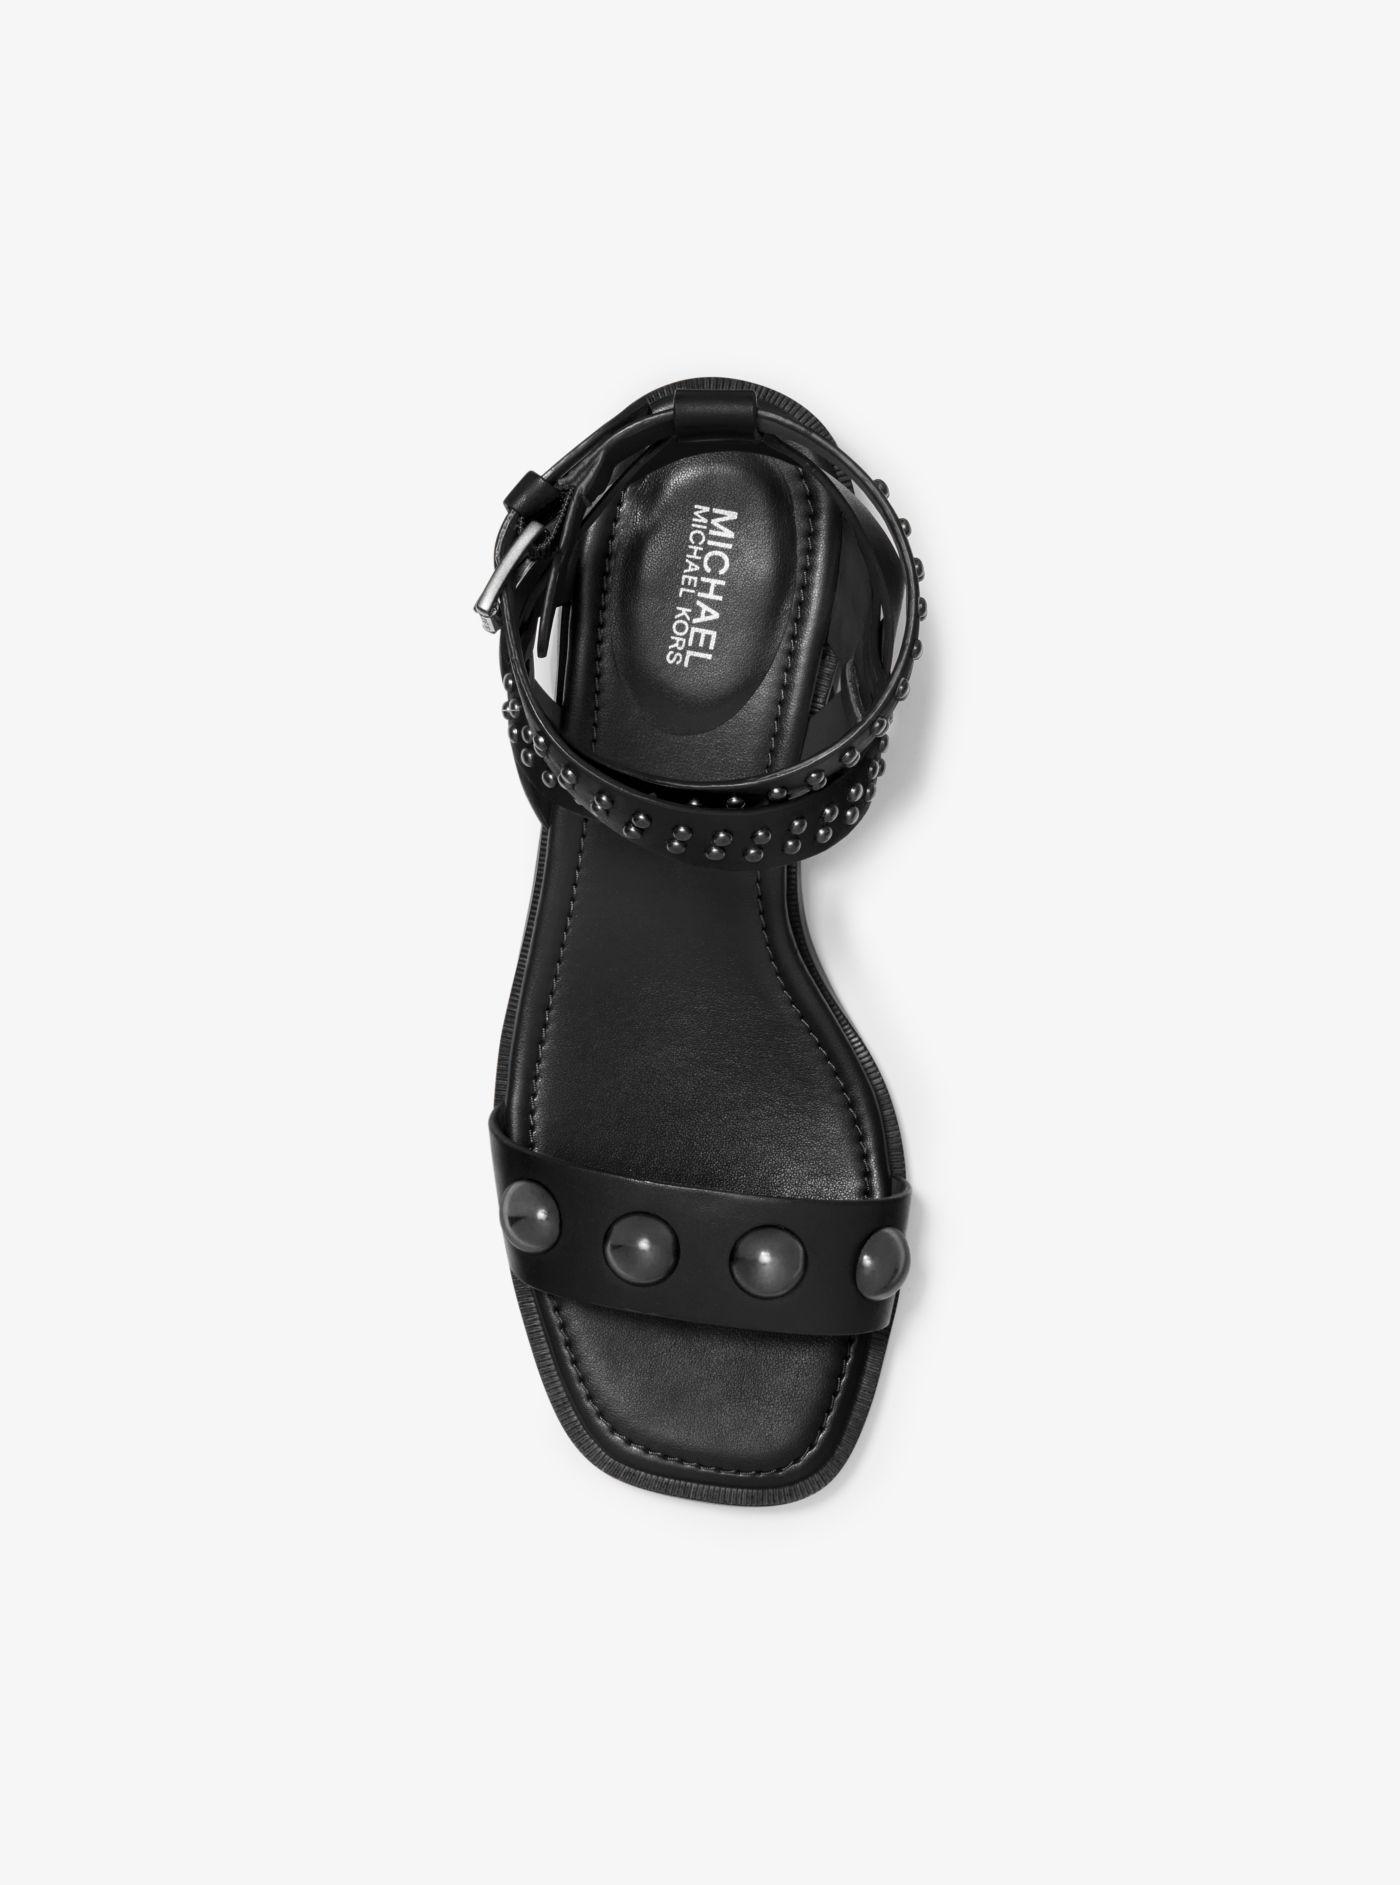 Michael Kors Mk Garner Studded Leather Sandal in Black | Lyst